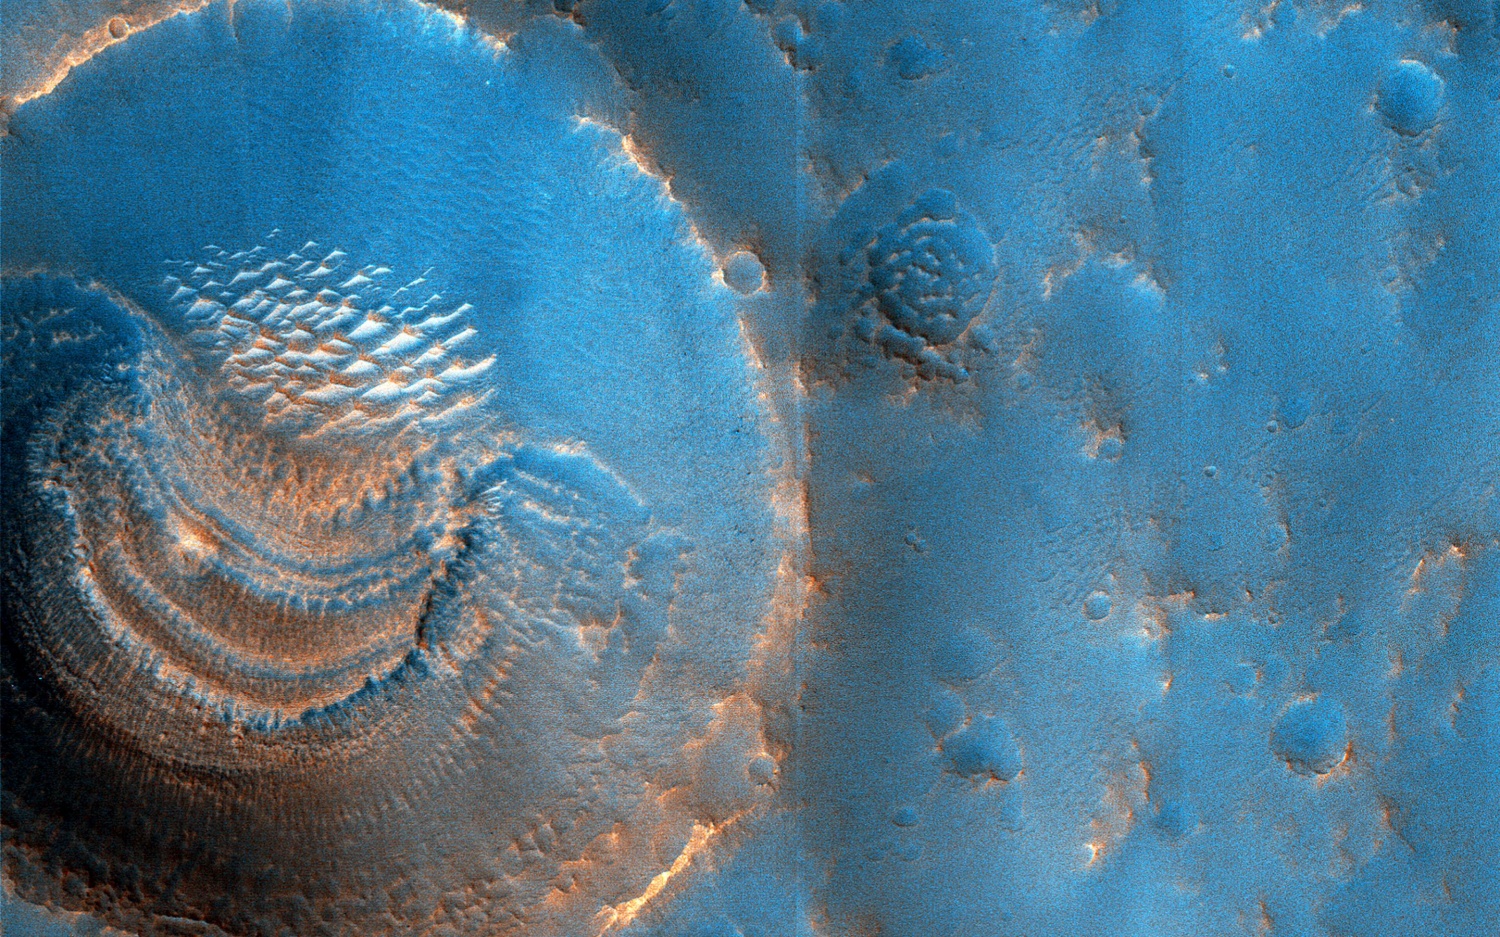 HIRISE Spots Martian Crater Deposits